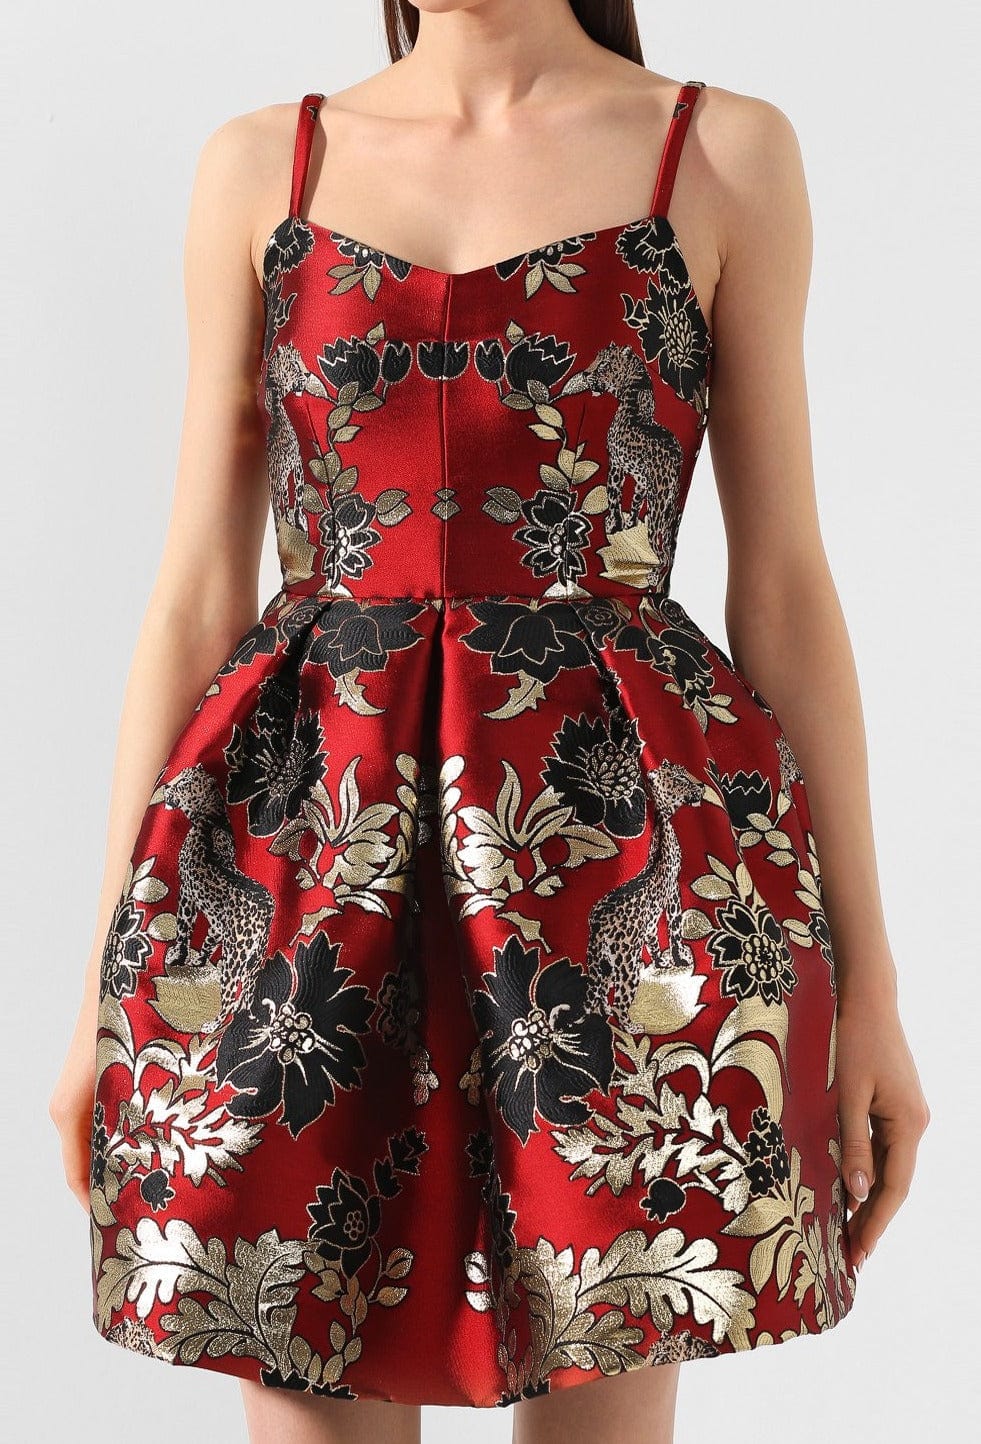 Dolce & Gabbana Floral And Leopard-Brocade Mini Dress